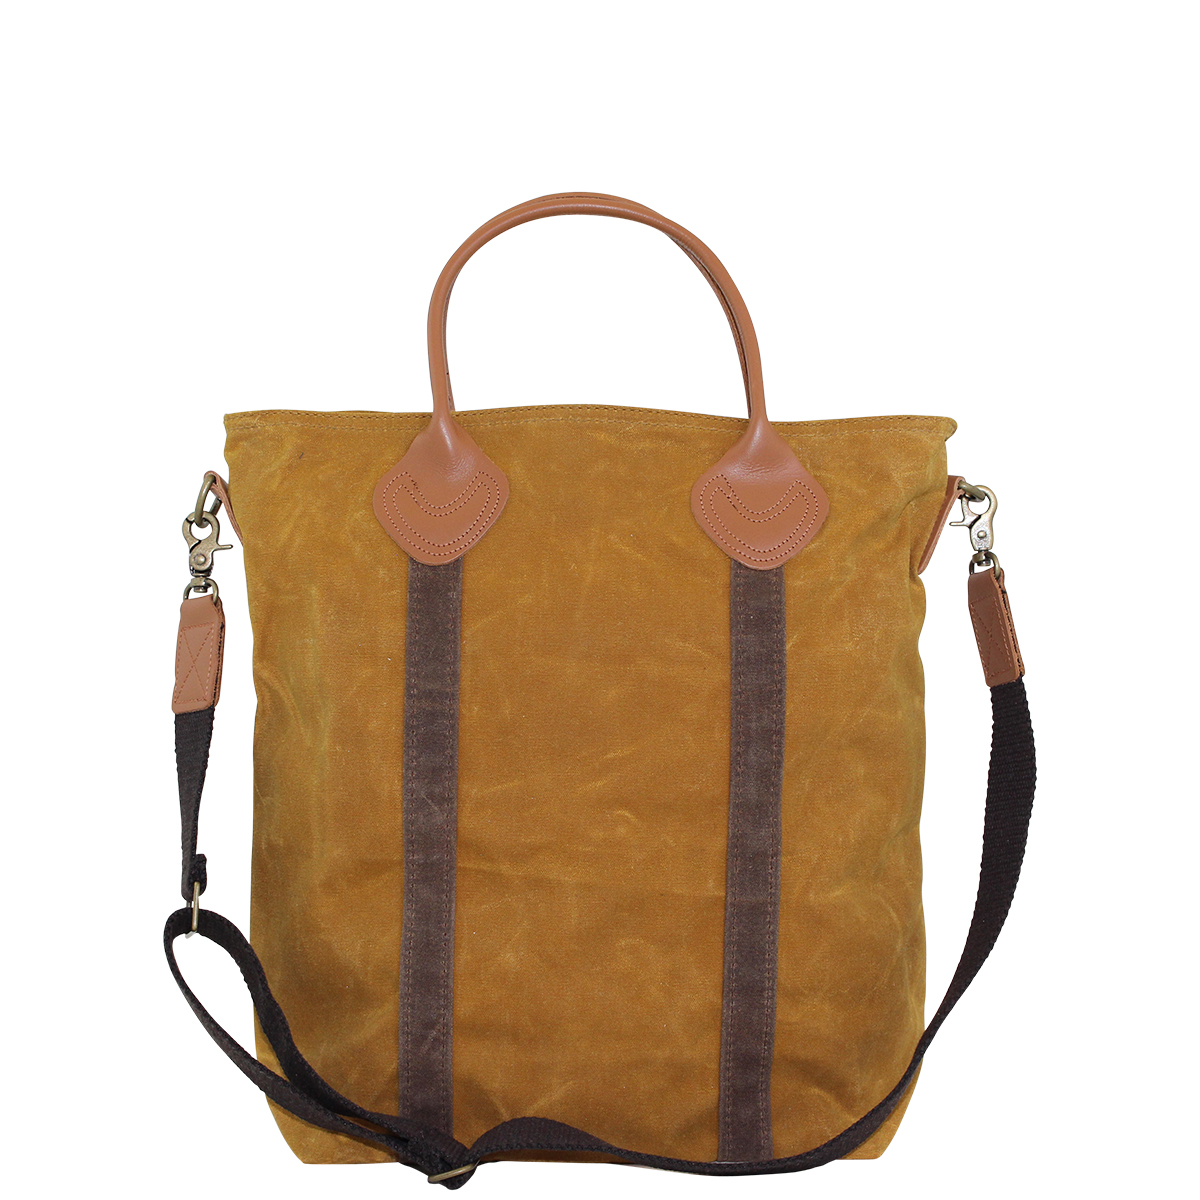 Work Tote Bag | Bag for Work | Solid Yellow & Khaki